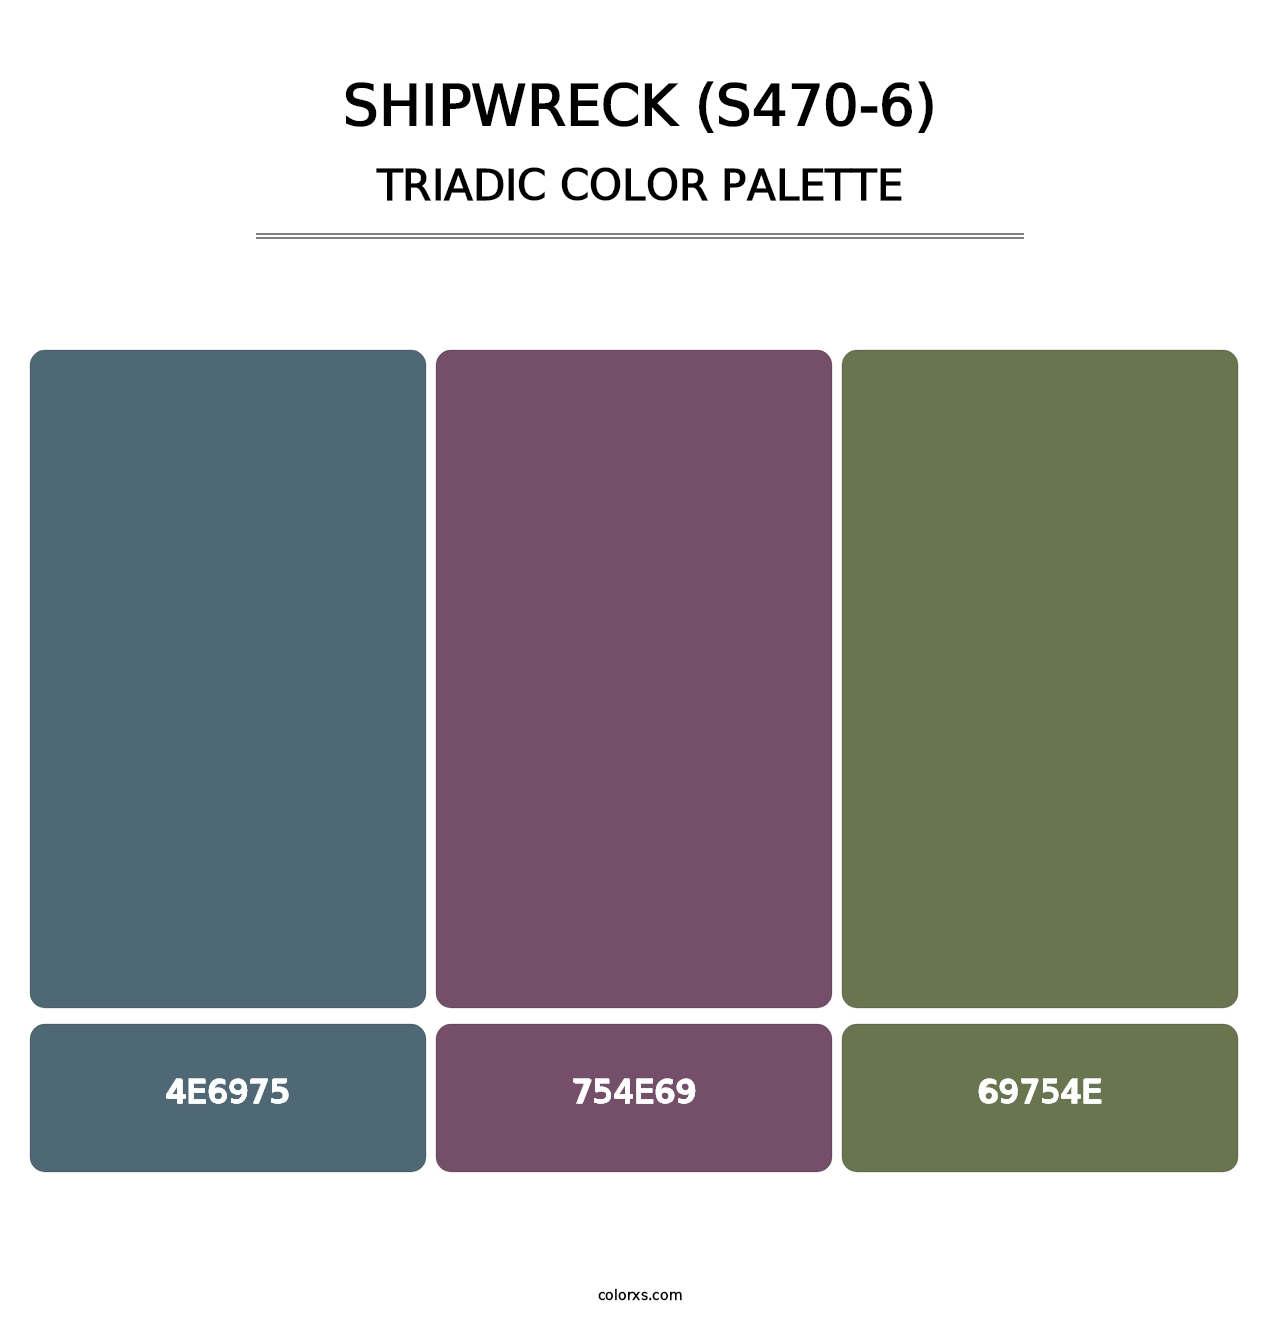 Shipwreck (S470-6) - Triadic Color Palette